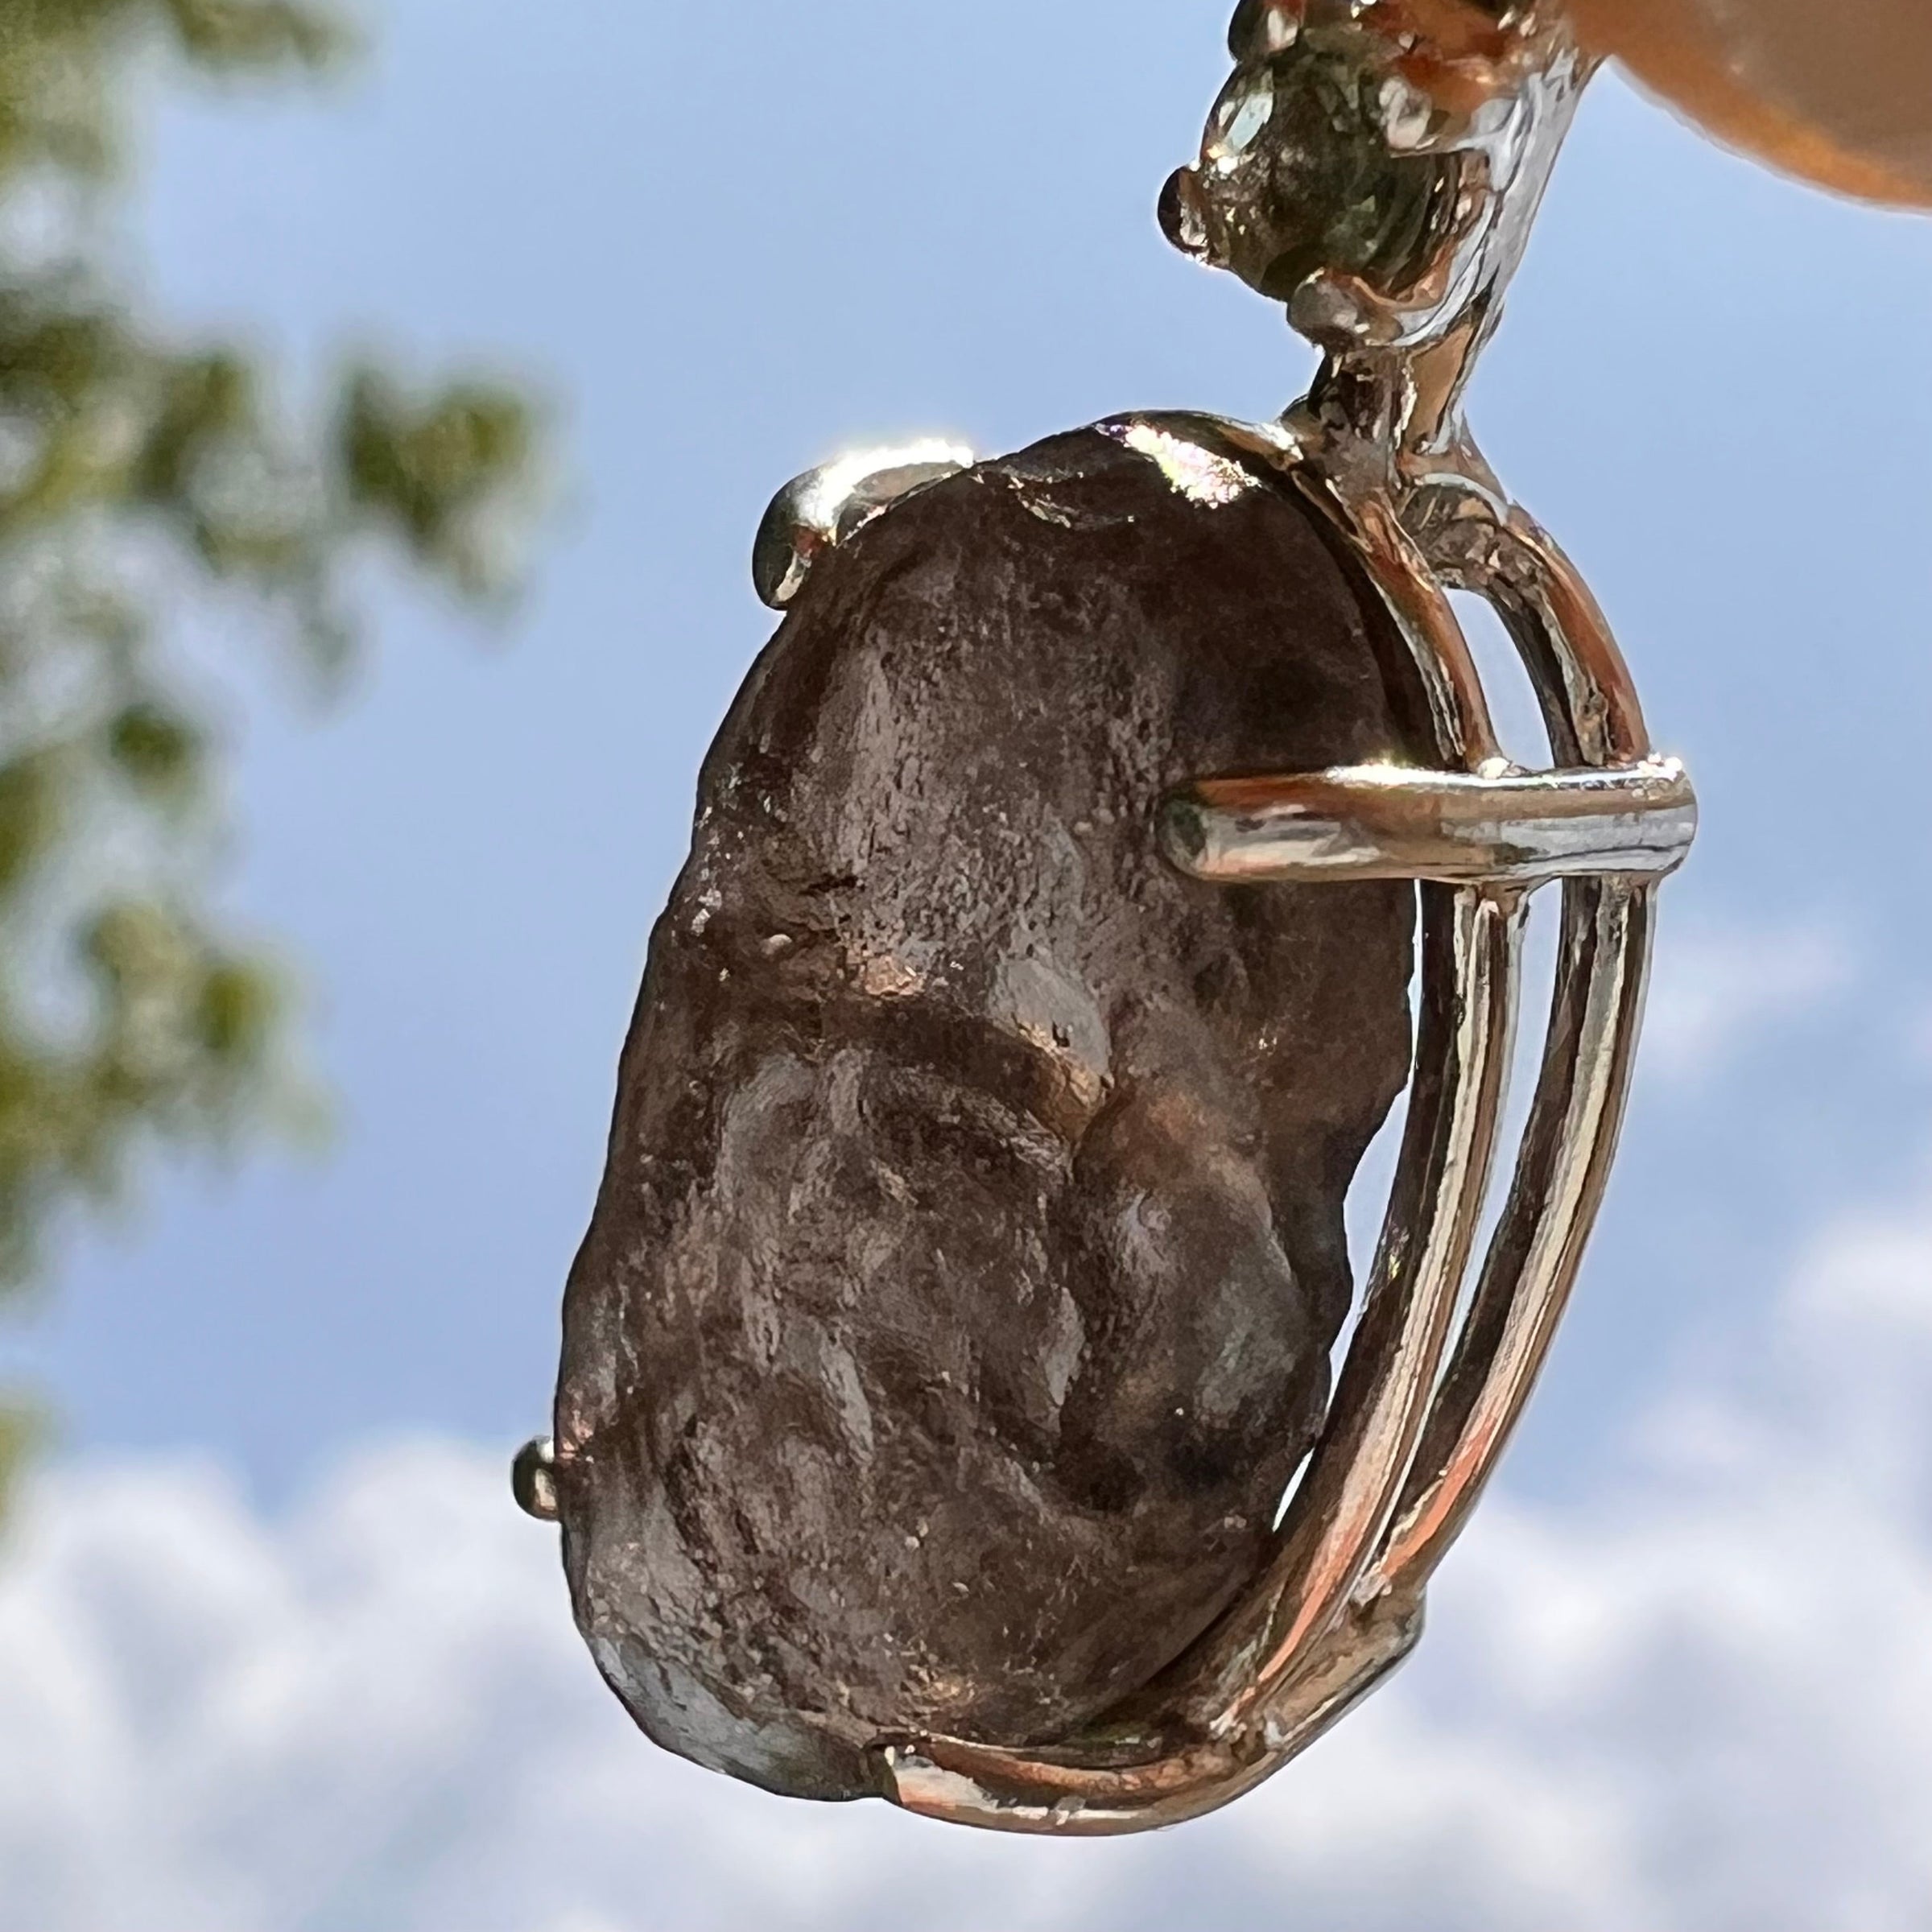 Colombianite & Moldavite Necklace Sterling Silver #5166-Moldavite Life